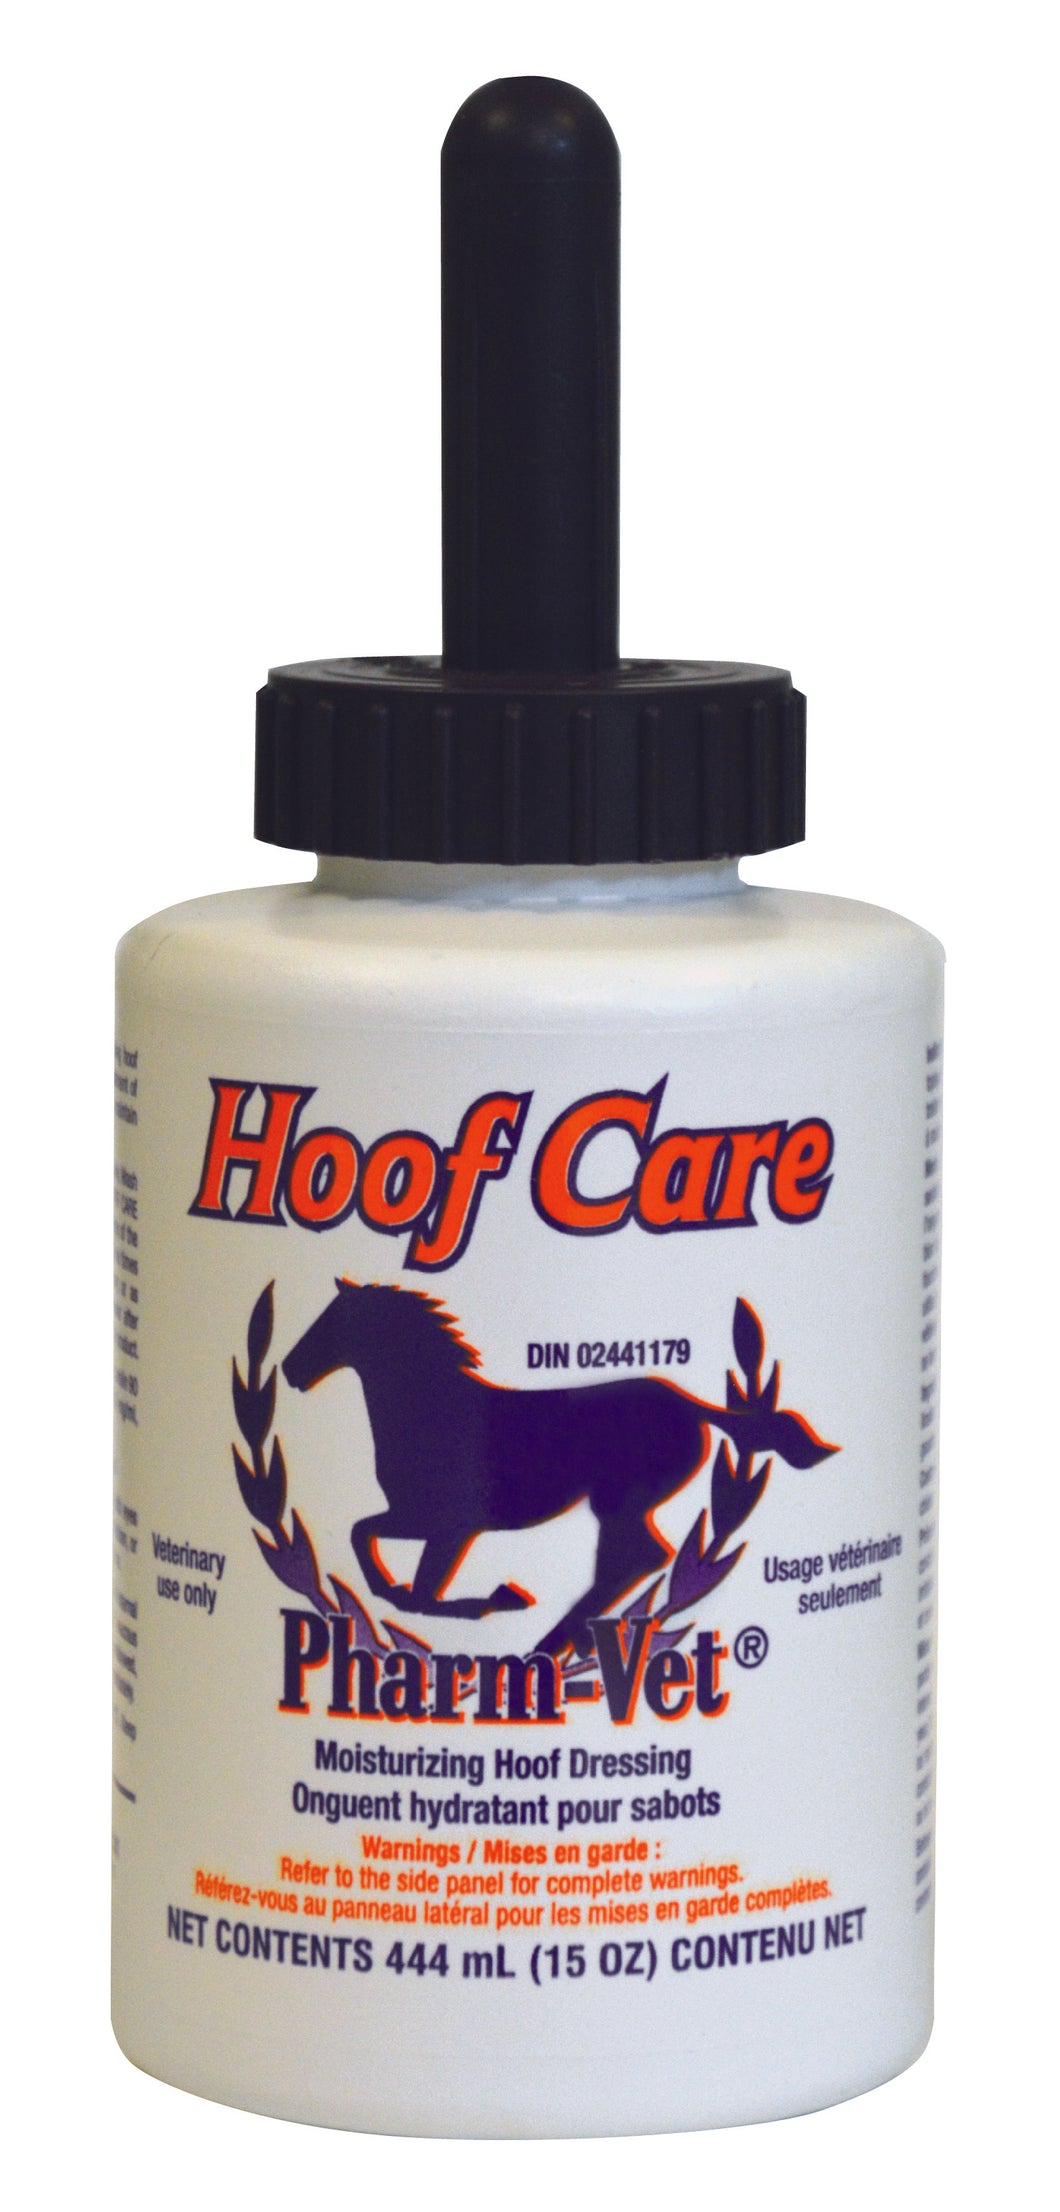 HOOF CARE 444ML Horse Supply  hoof dressing treating dry, cracked hoof